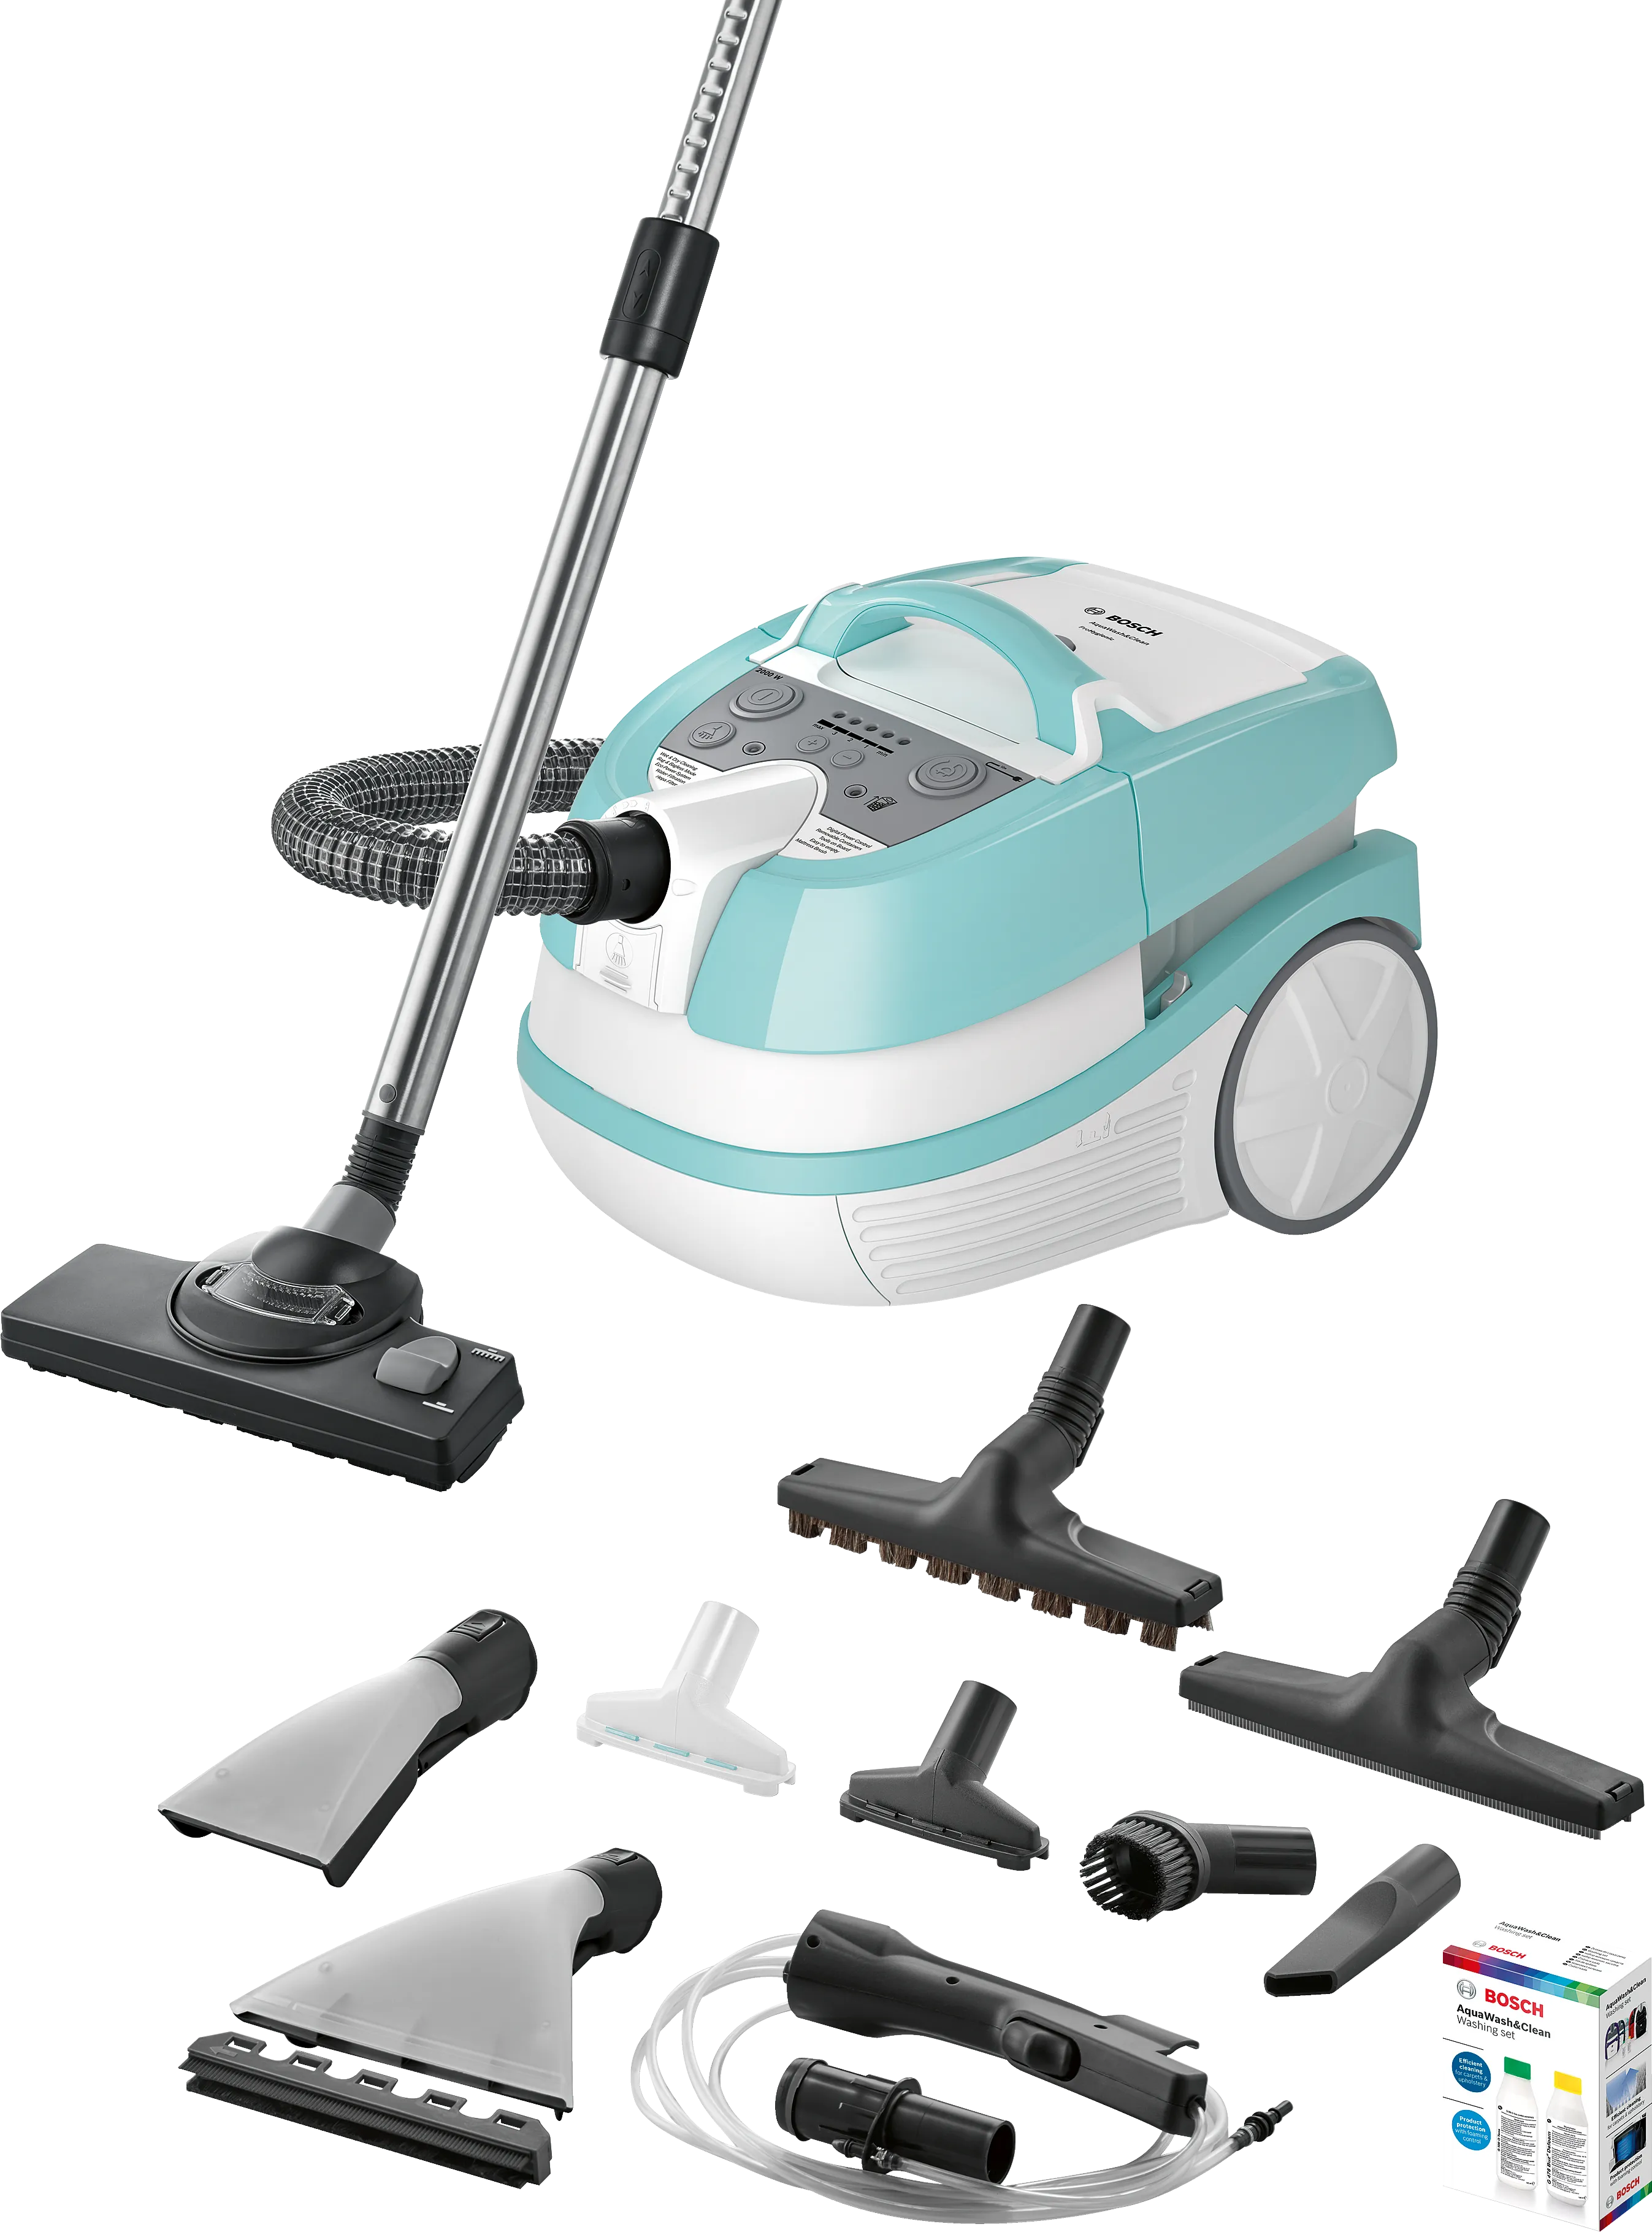 Series 4 Wet & dry vacuum cleaner 